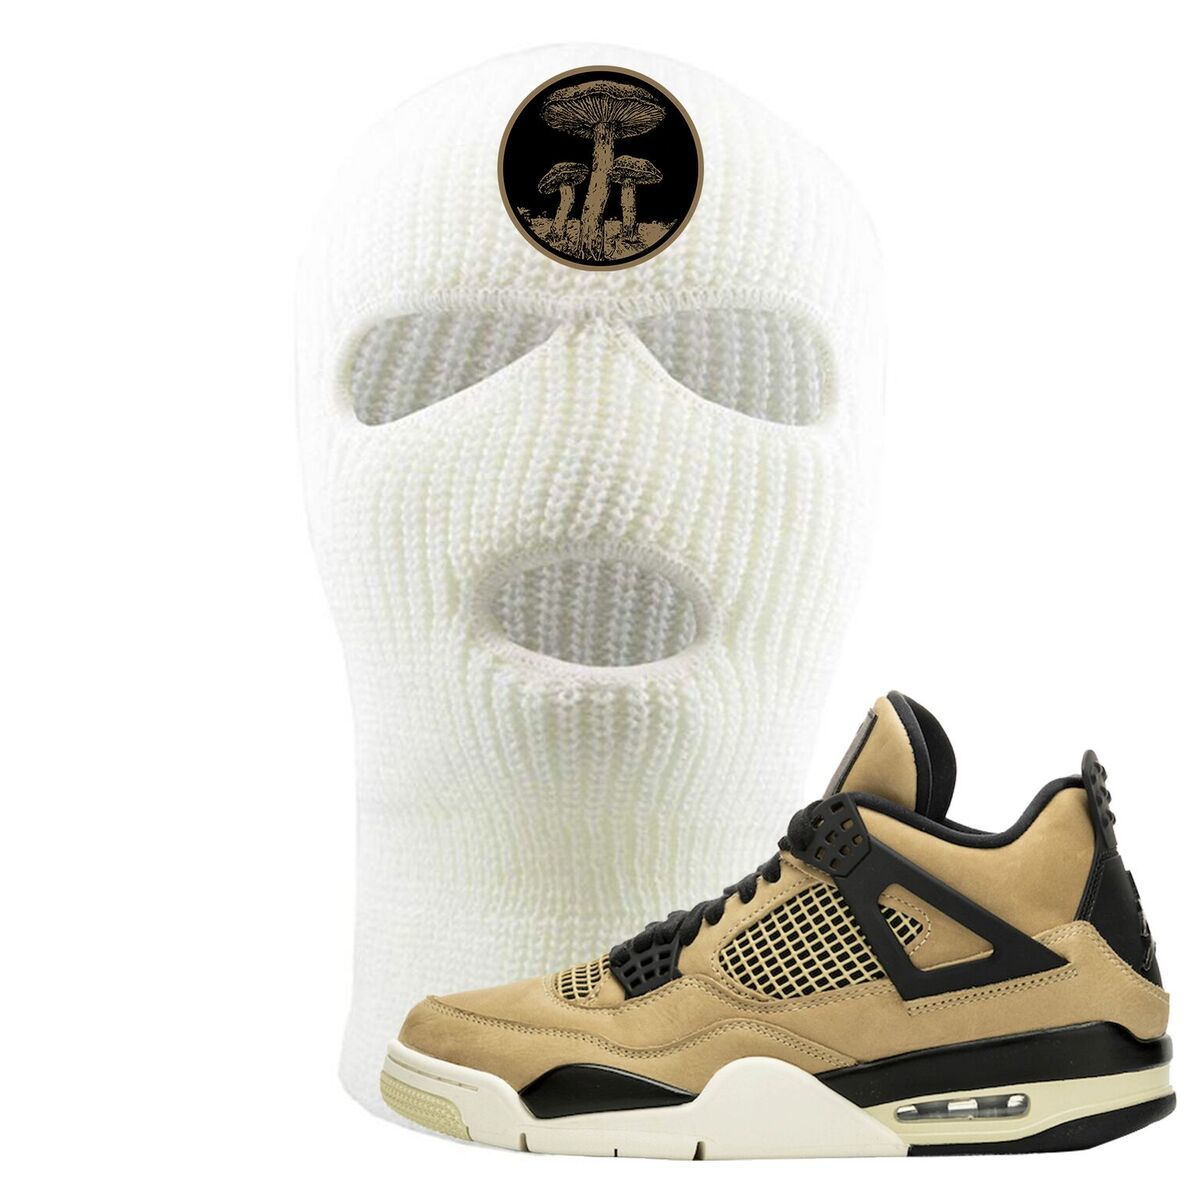 Jordan 4 WMNS Mushroom Sneaker Matching White Mushroom Logo Ski Mask